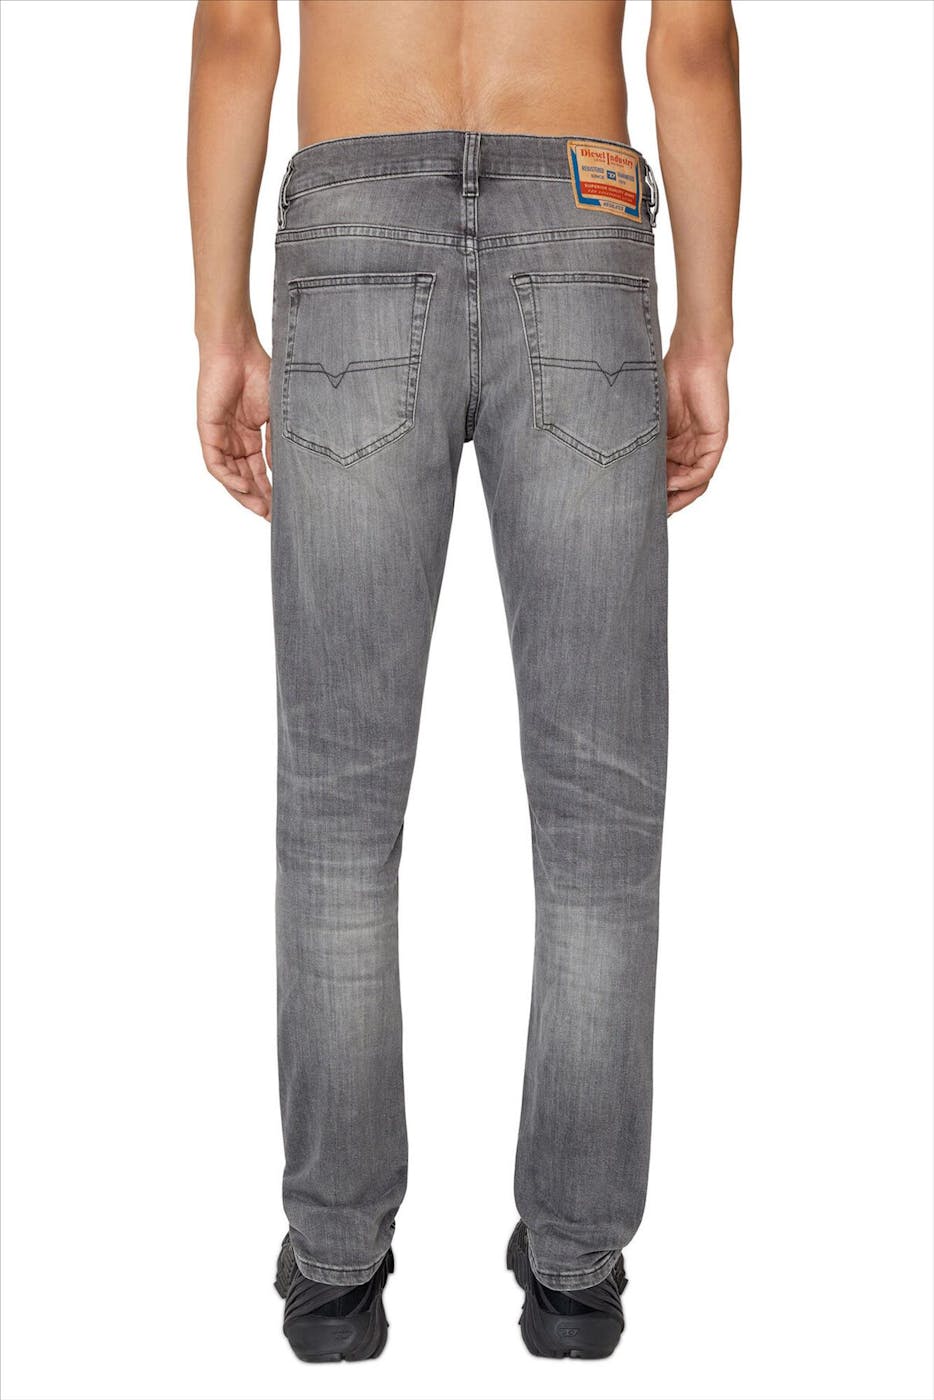 Diesel - Grijze D-Luster Slim jeans